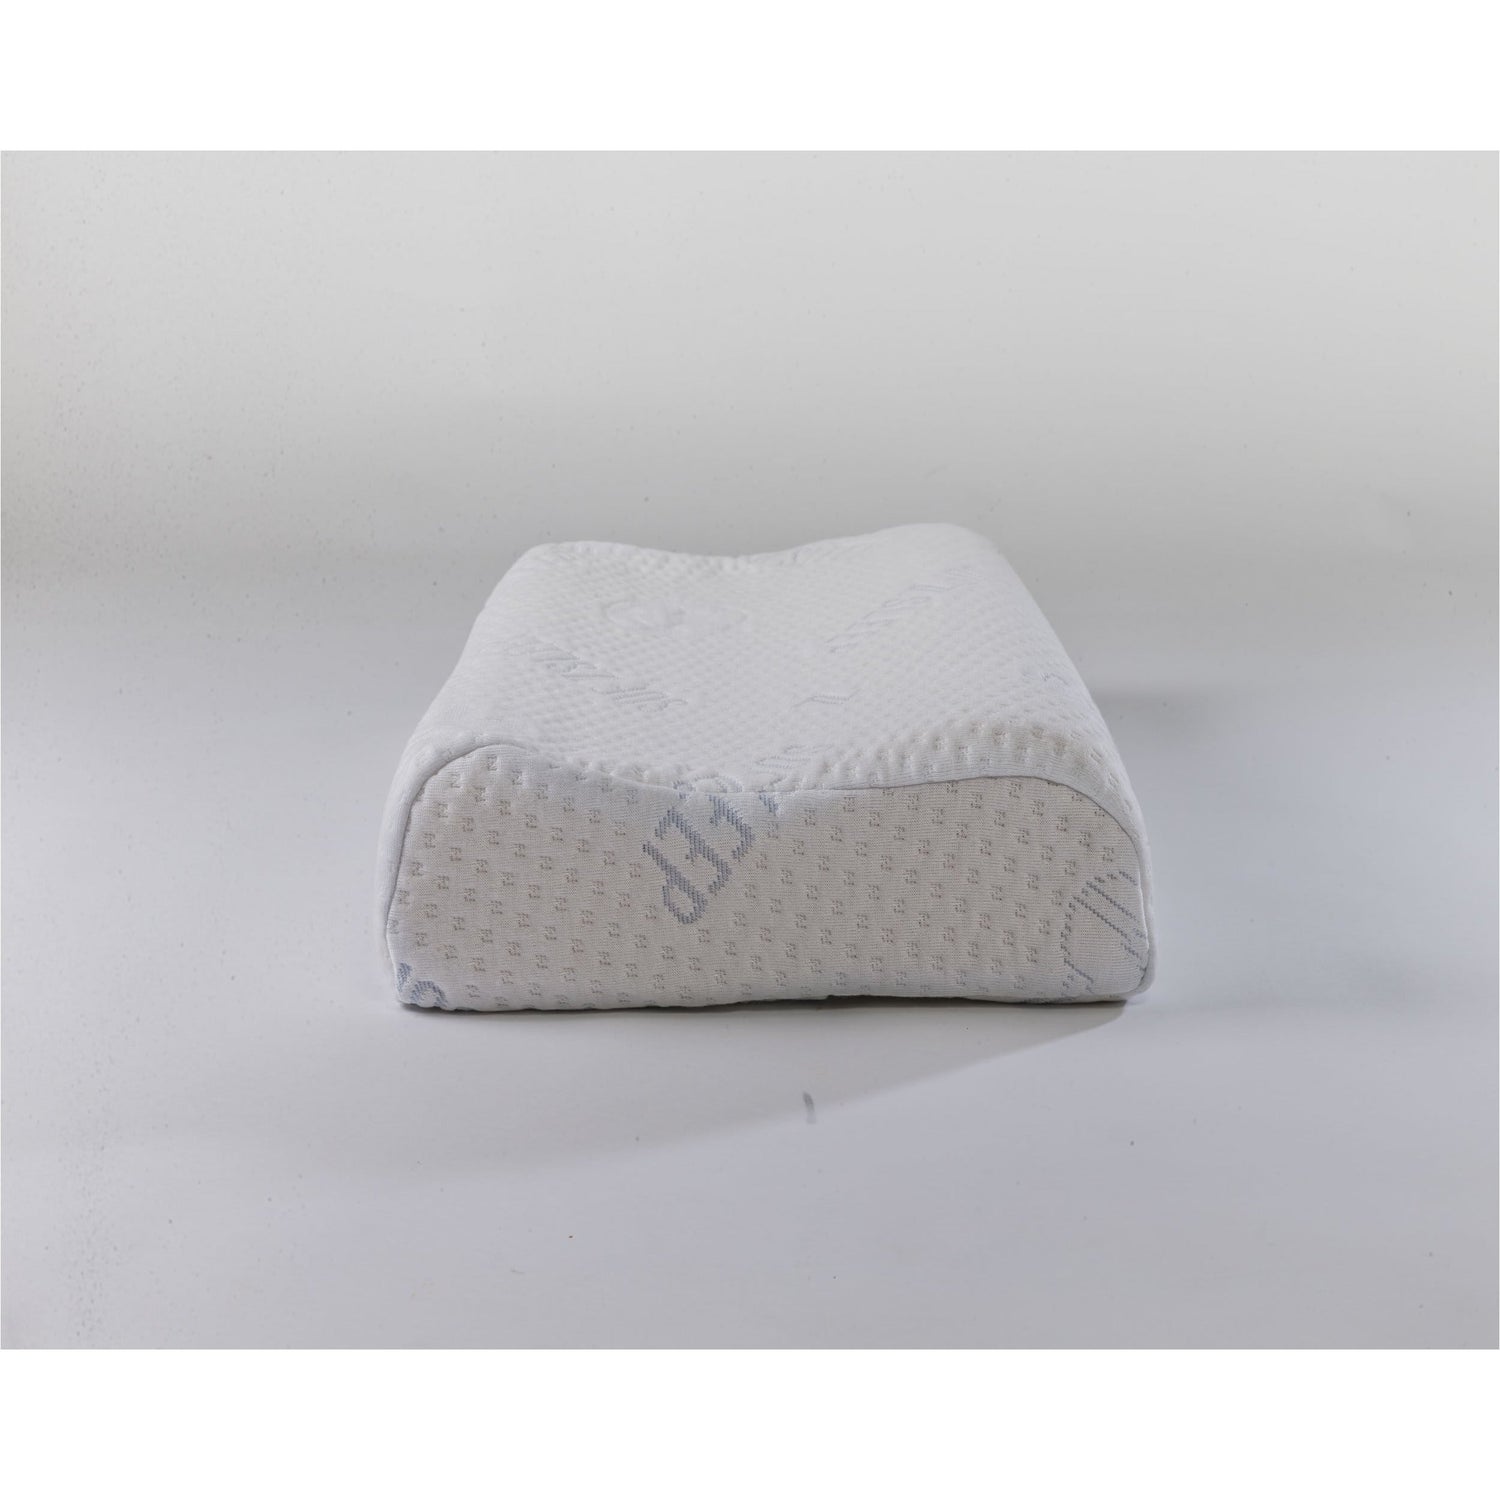 Sofzsleep Junior S Latex Pillow 2-5yo ( 44 x 27 x 6 cm) | Little Baby.